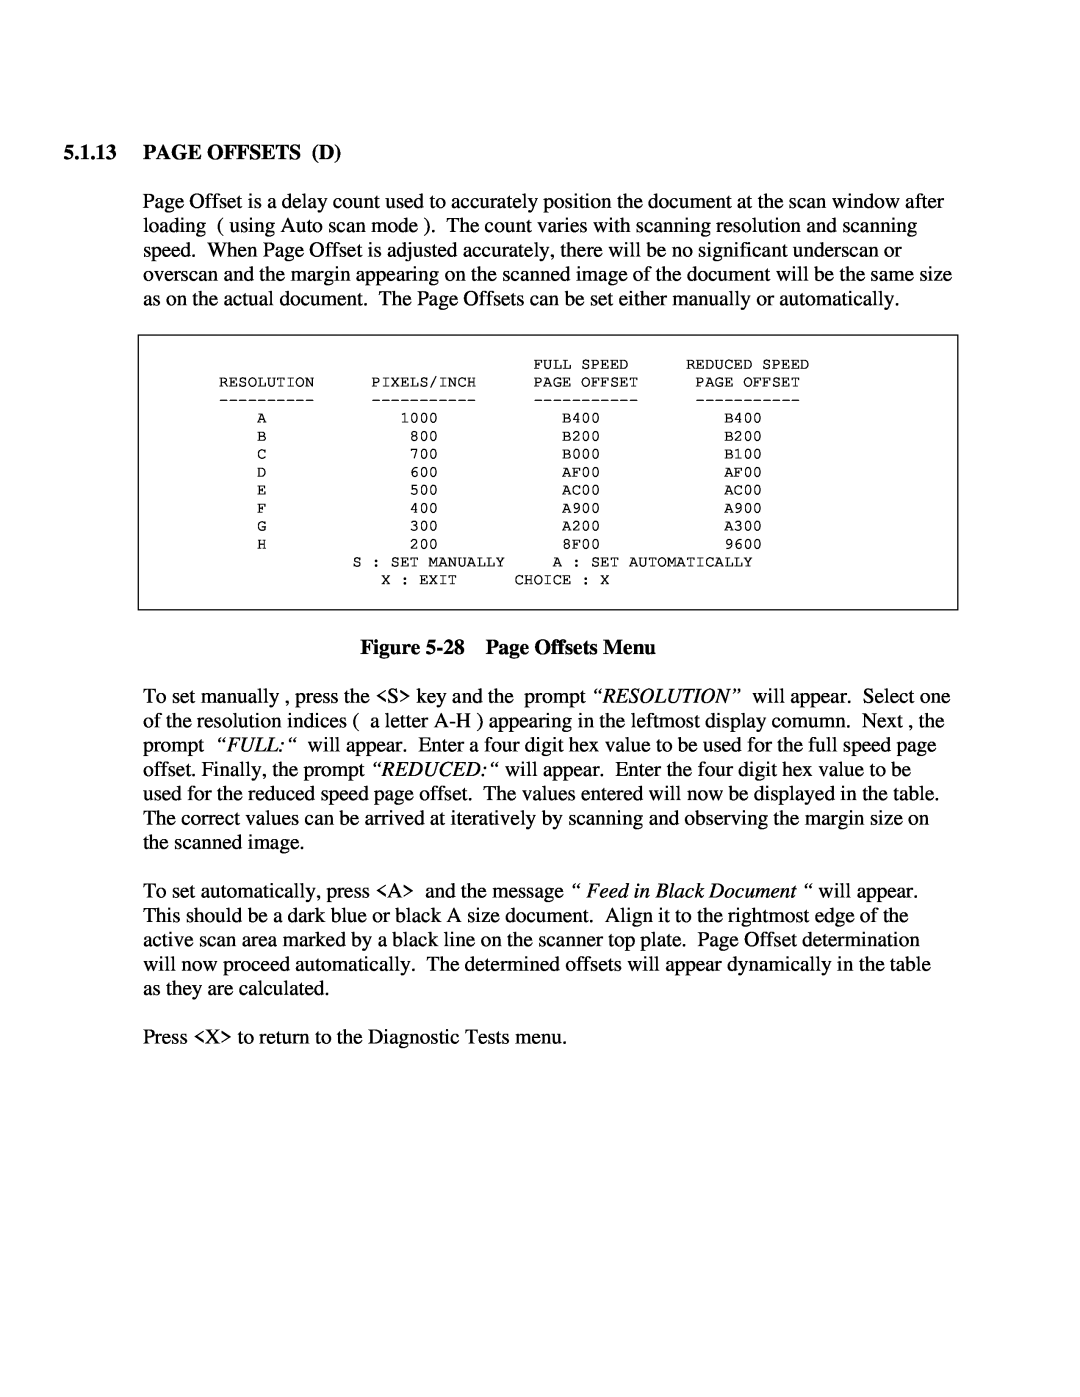 IBM CF Series manual Page Offsets D, 28 Page Offsets Menu 